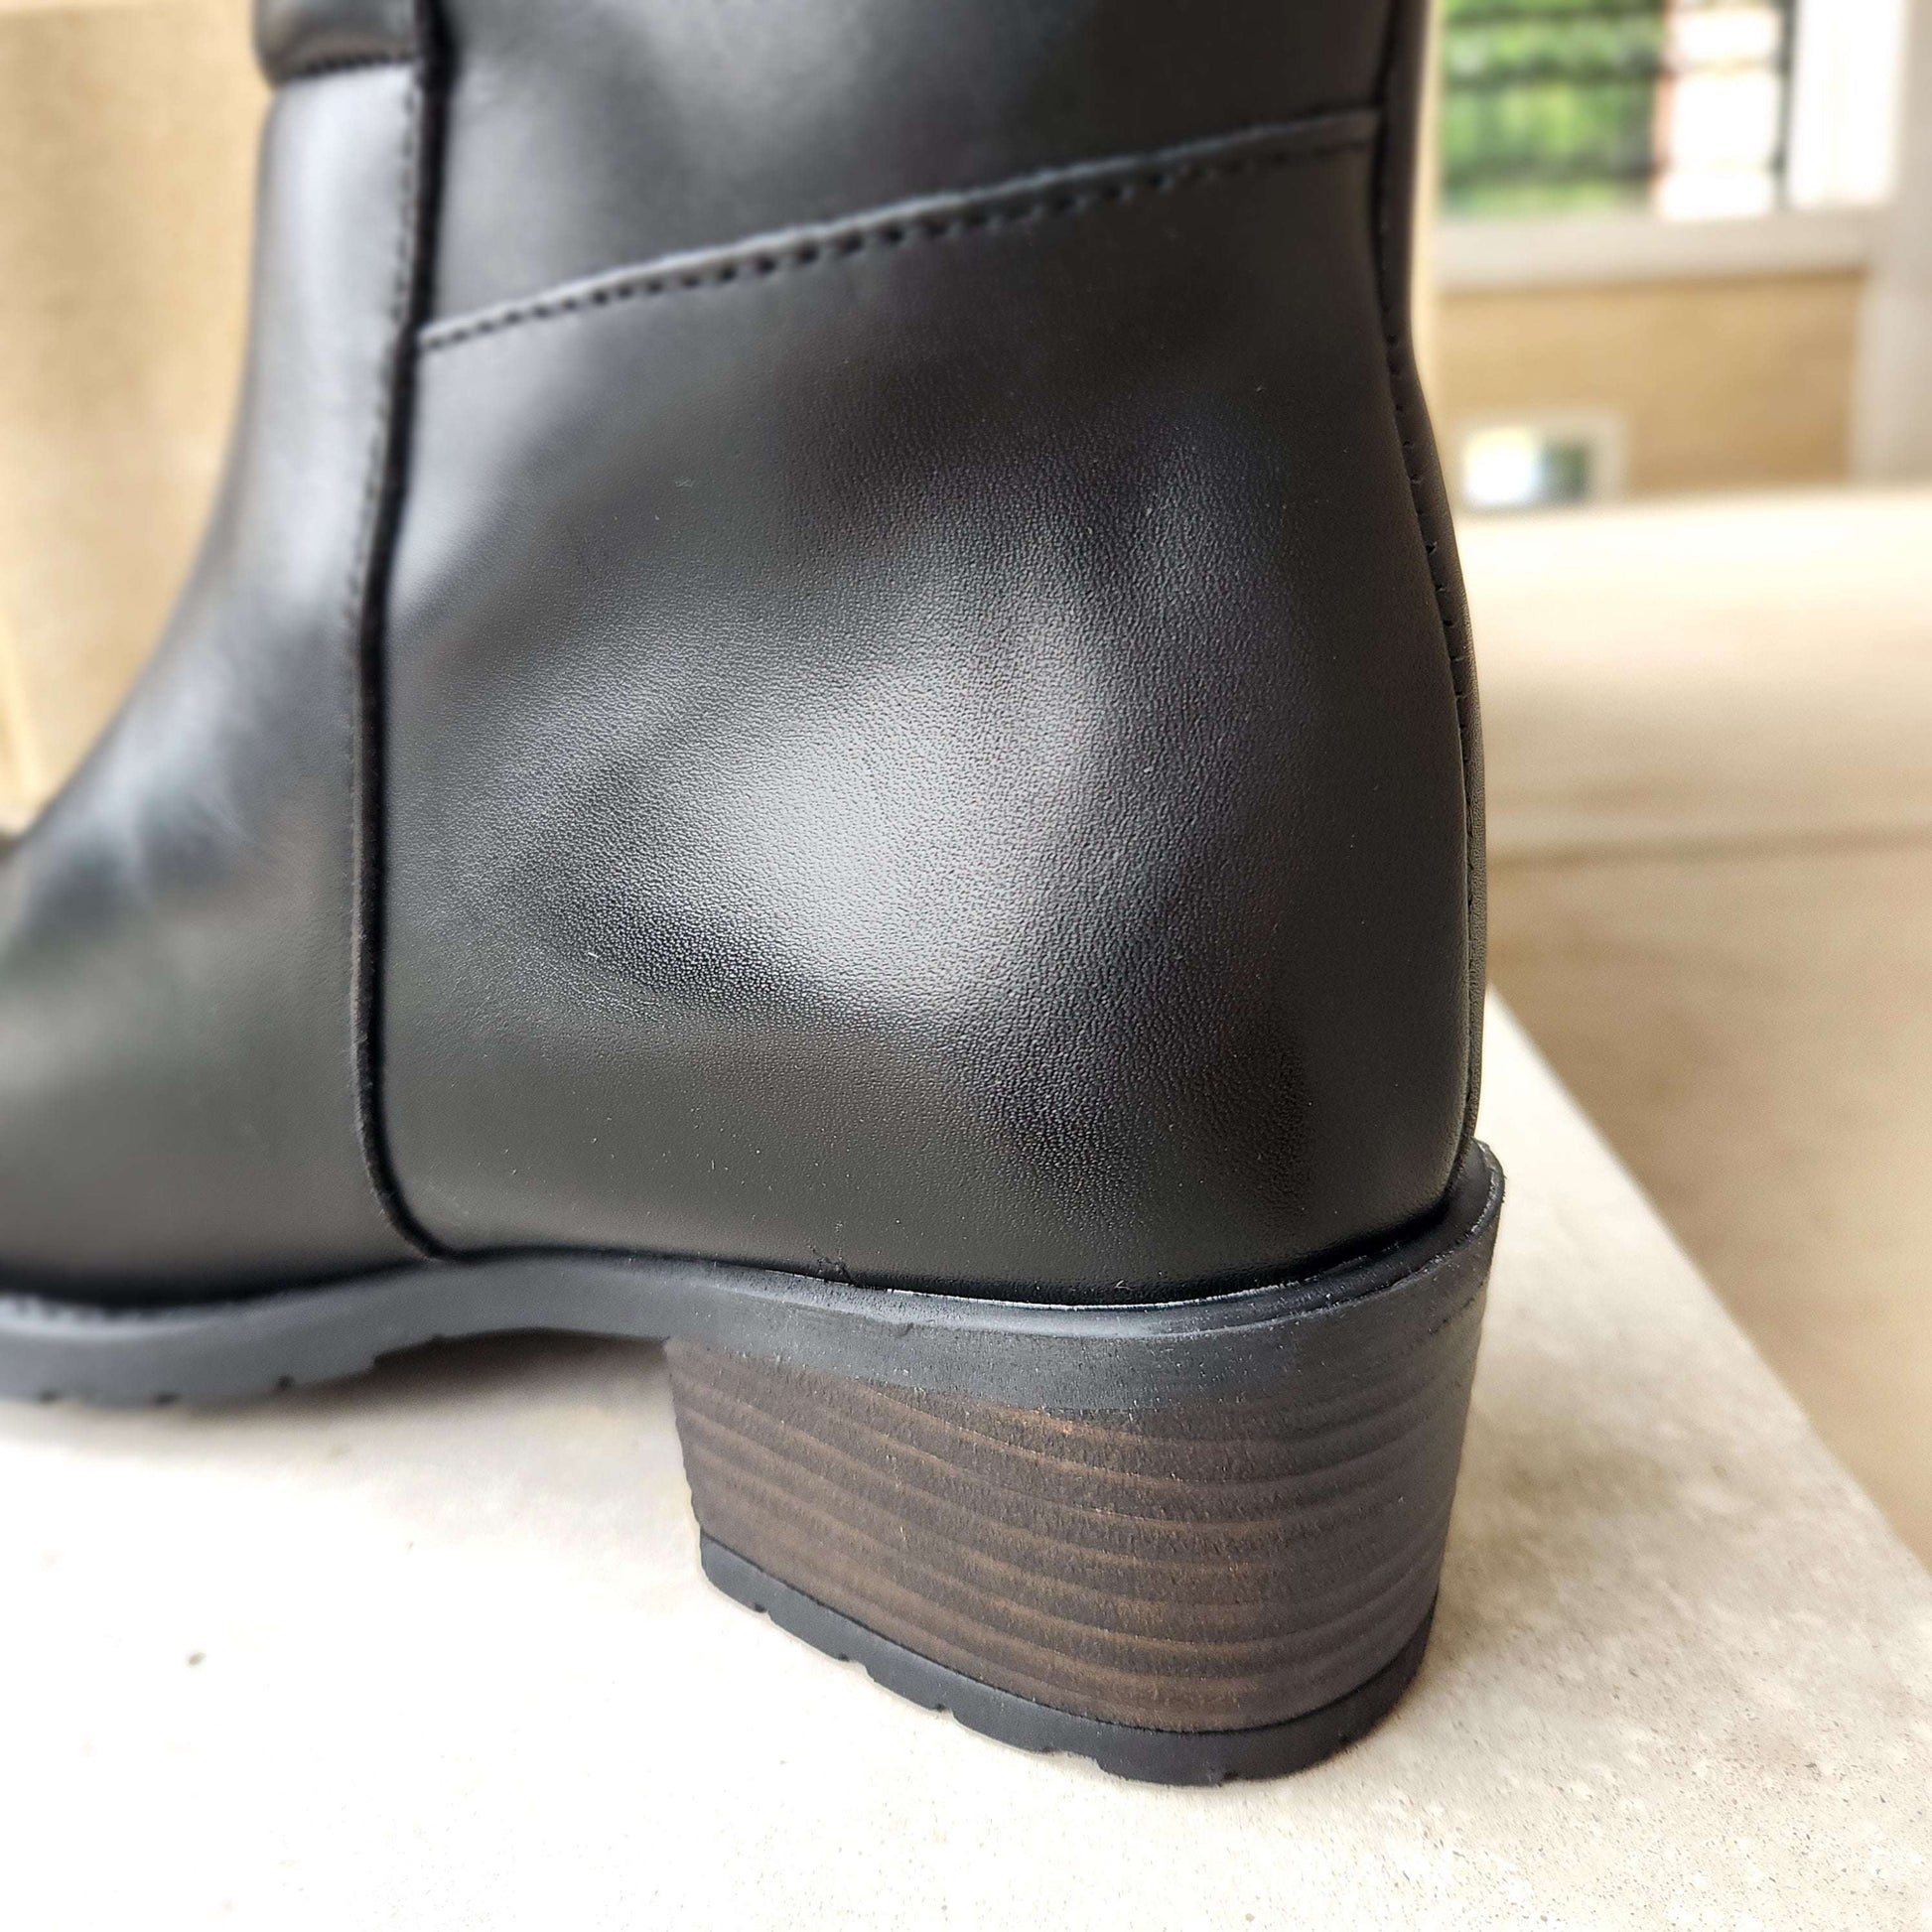 Eric Michael - Lauren Waterproof Tall Leather Boot, Boots, Eric Michael, Plum Bottom